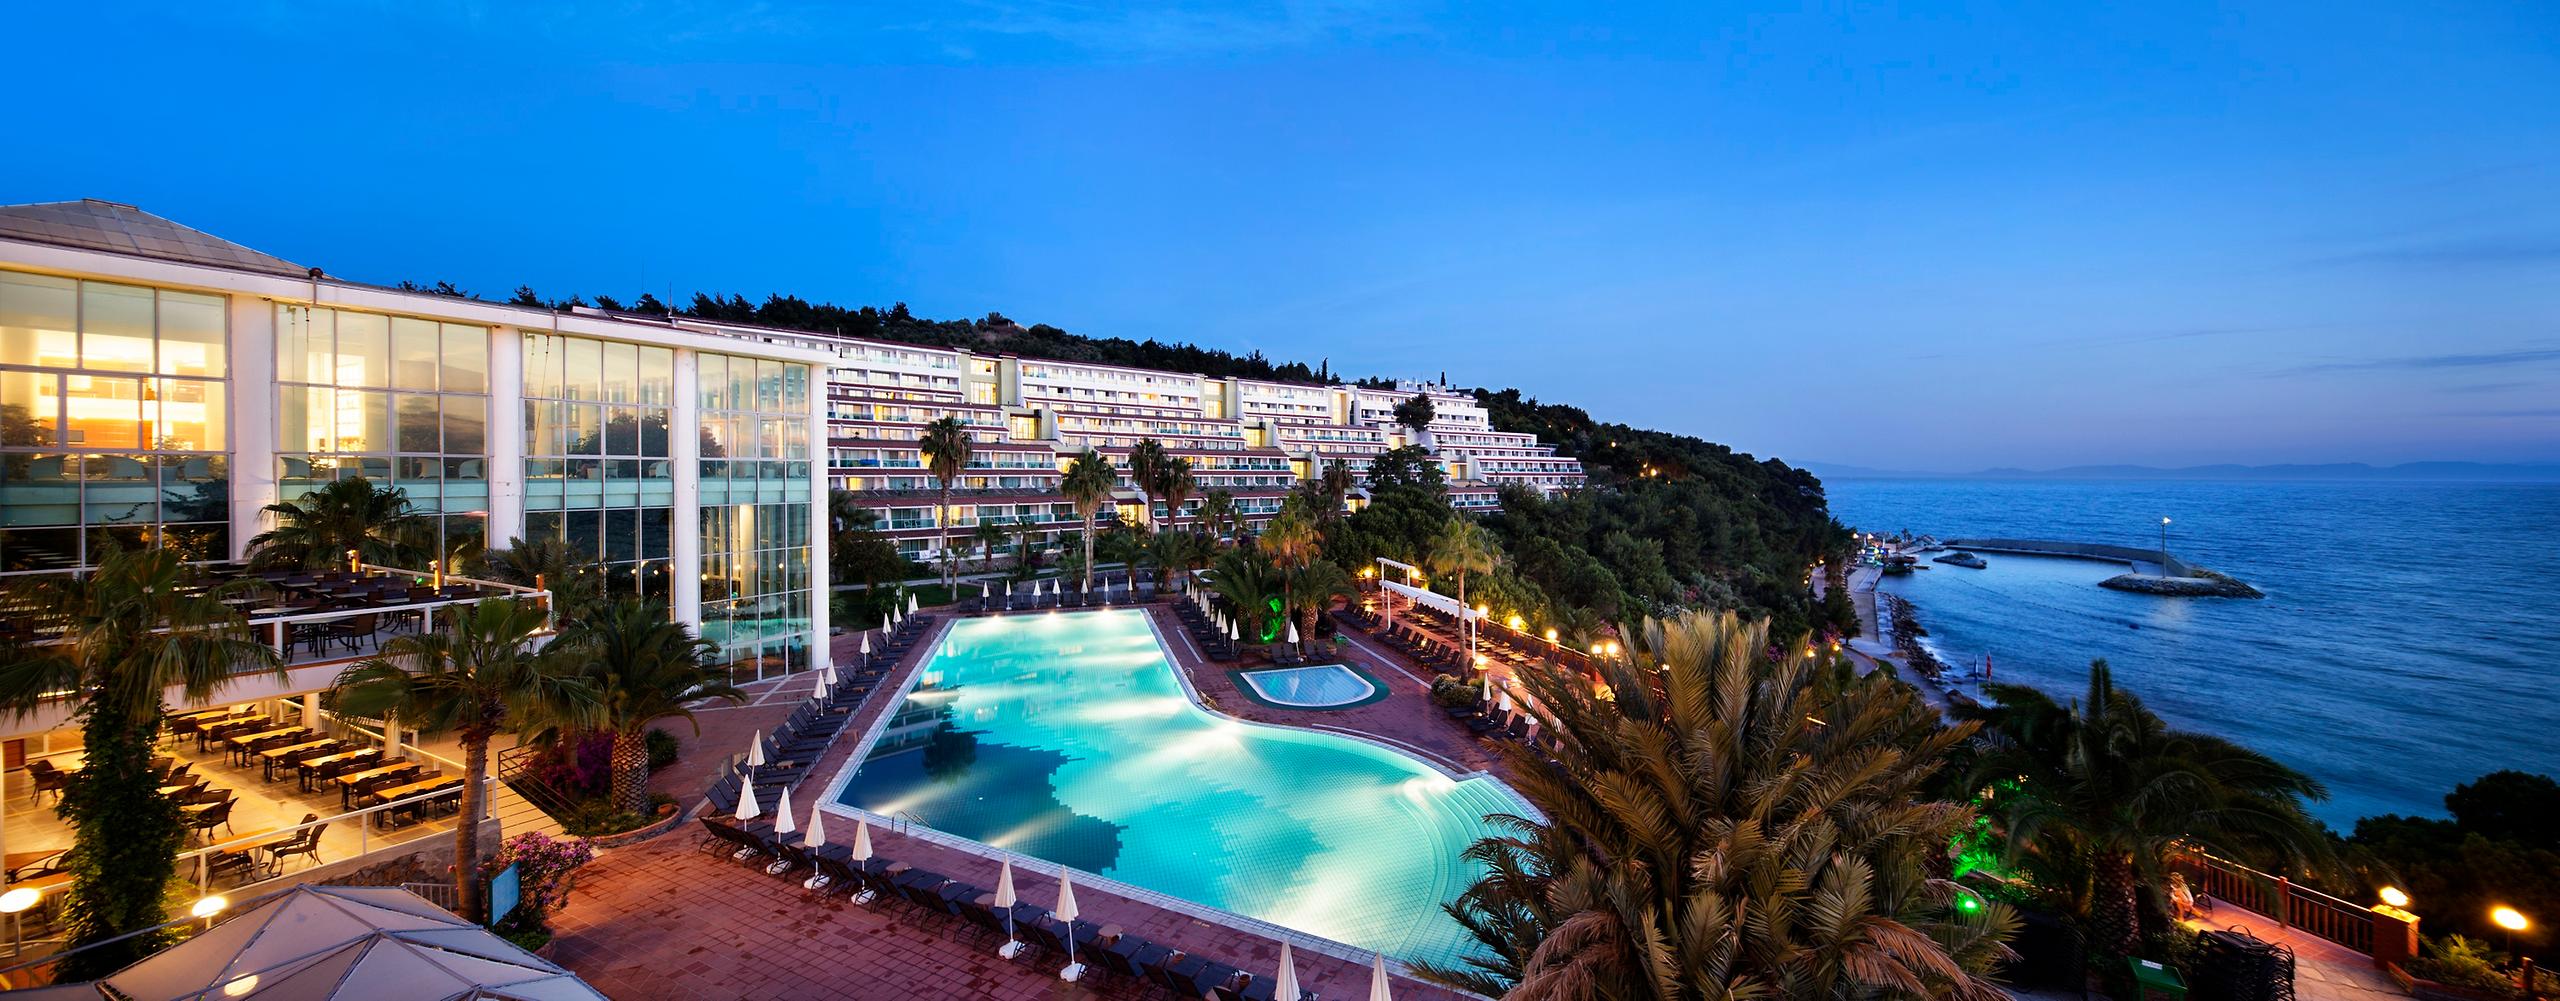 Pine Bay Holiday Resort Hotel